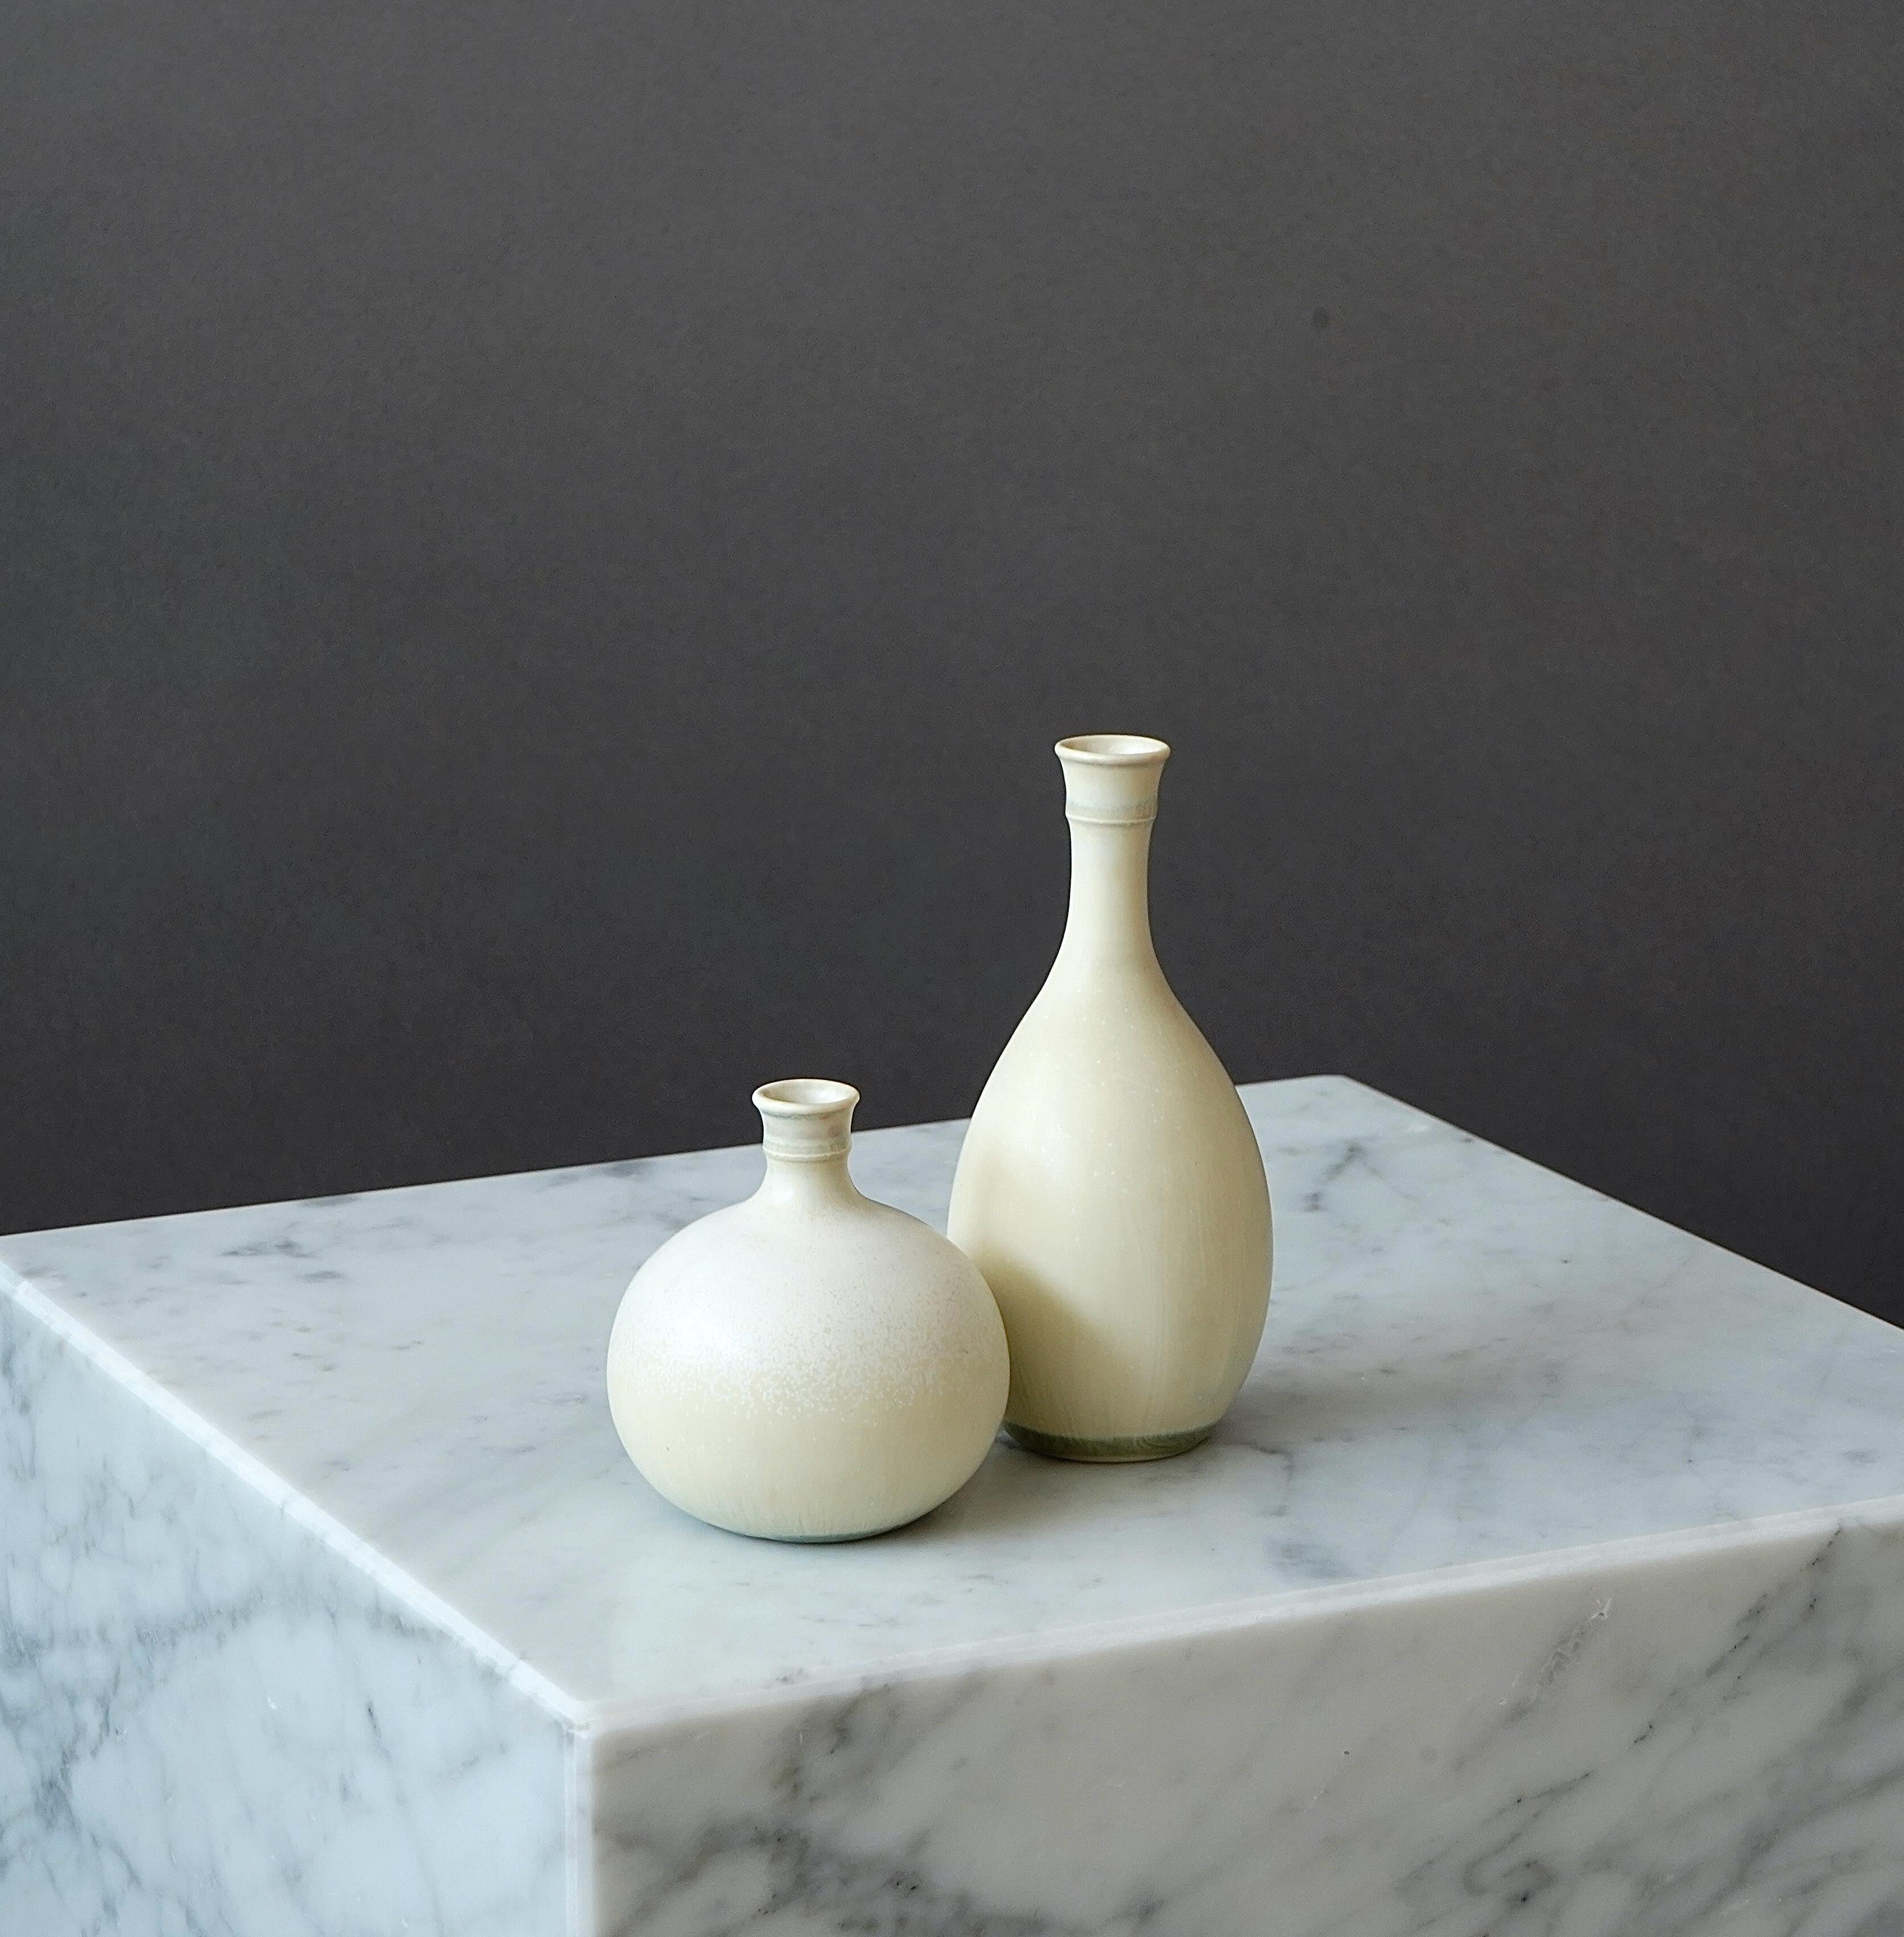 Set of 2 beautiful stoneware vases with amazing glaze.
Made by Stig Lindberg in Gustavsberg Studio, Sweden. 1950s.

Great condition.
Impressed 